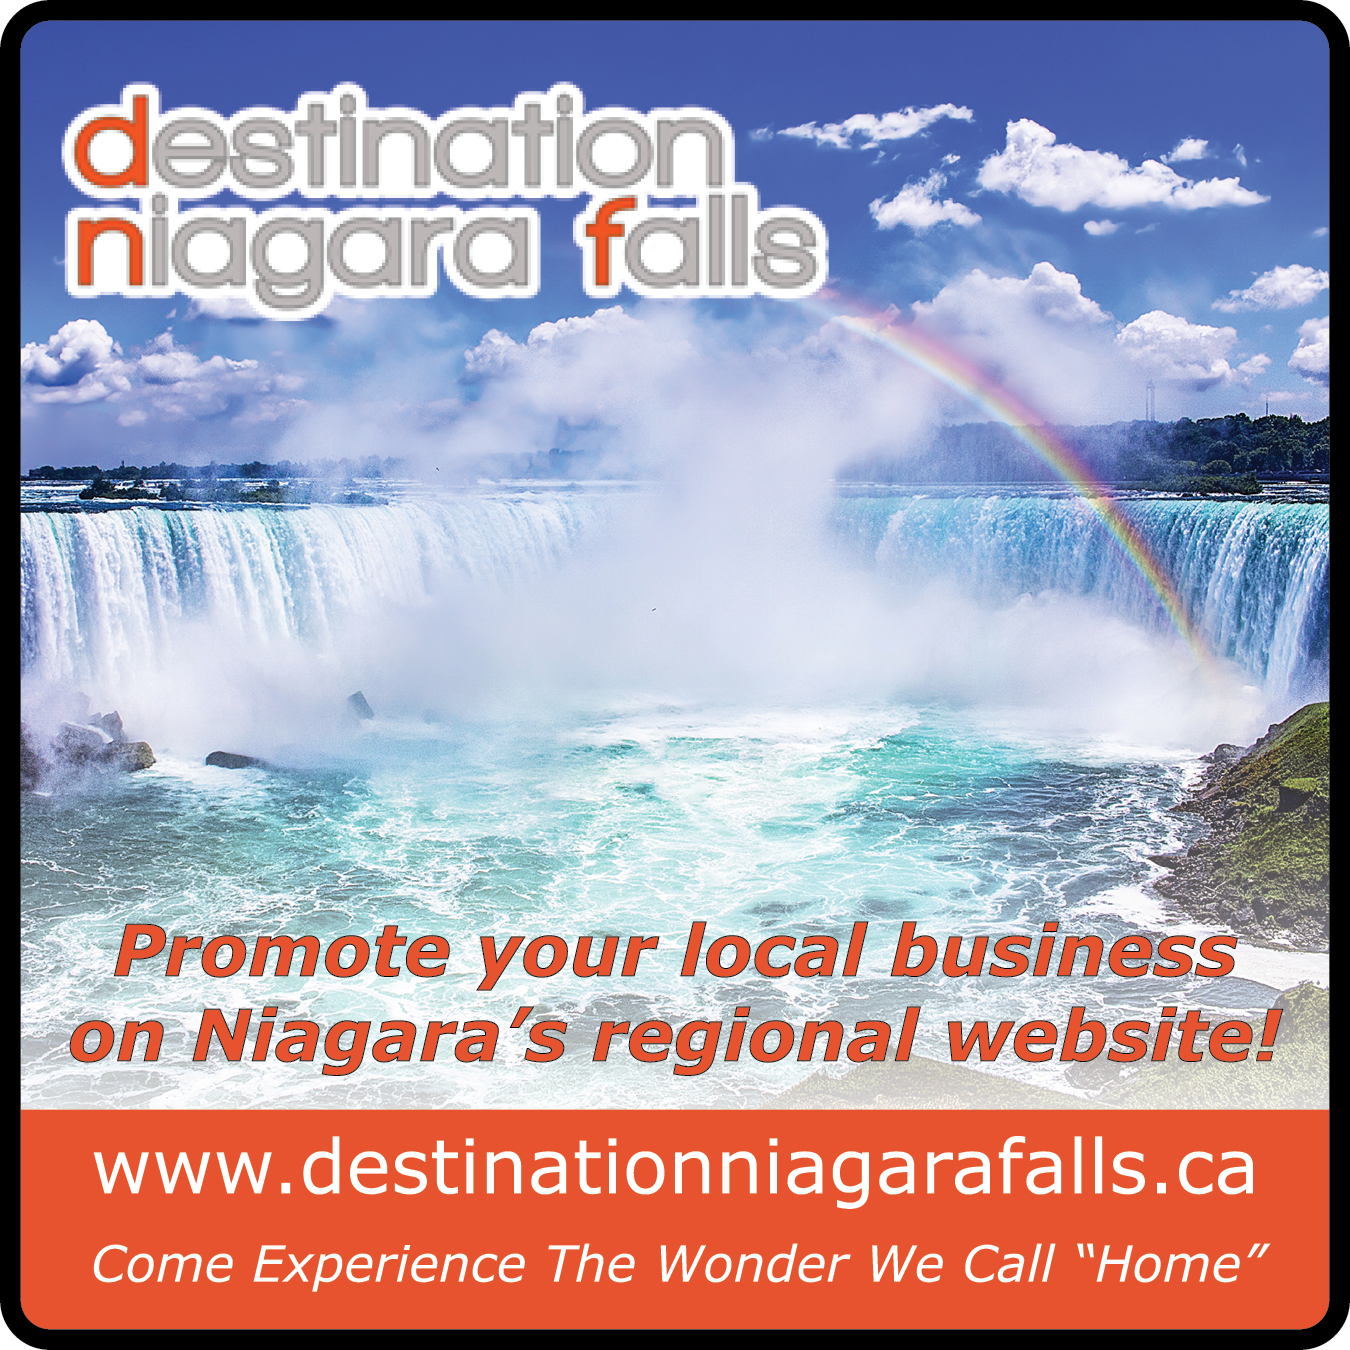 Destination Niagara Falls